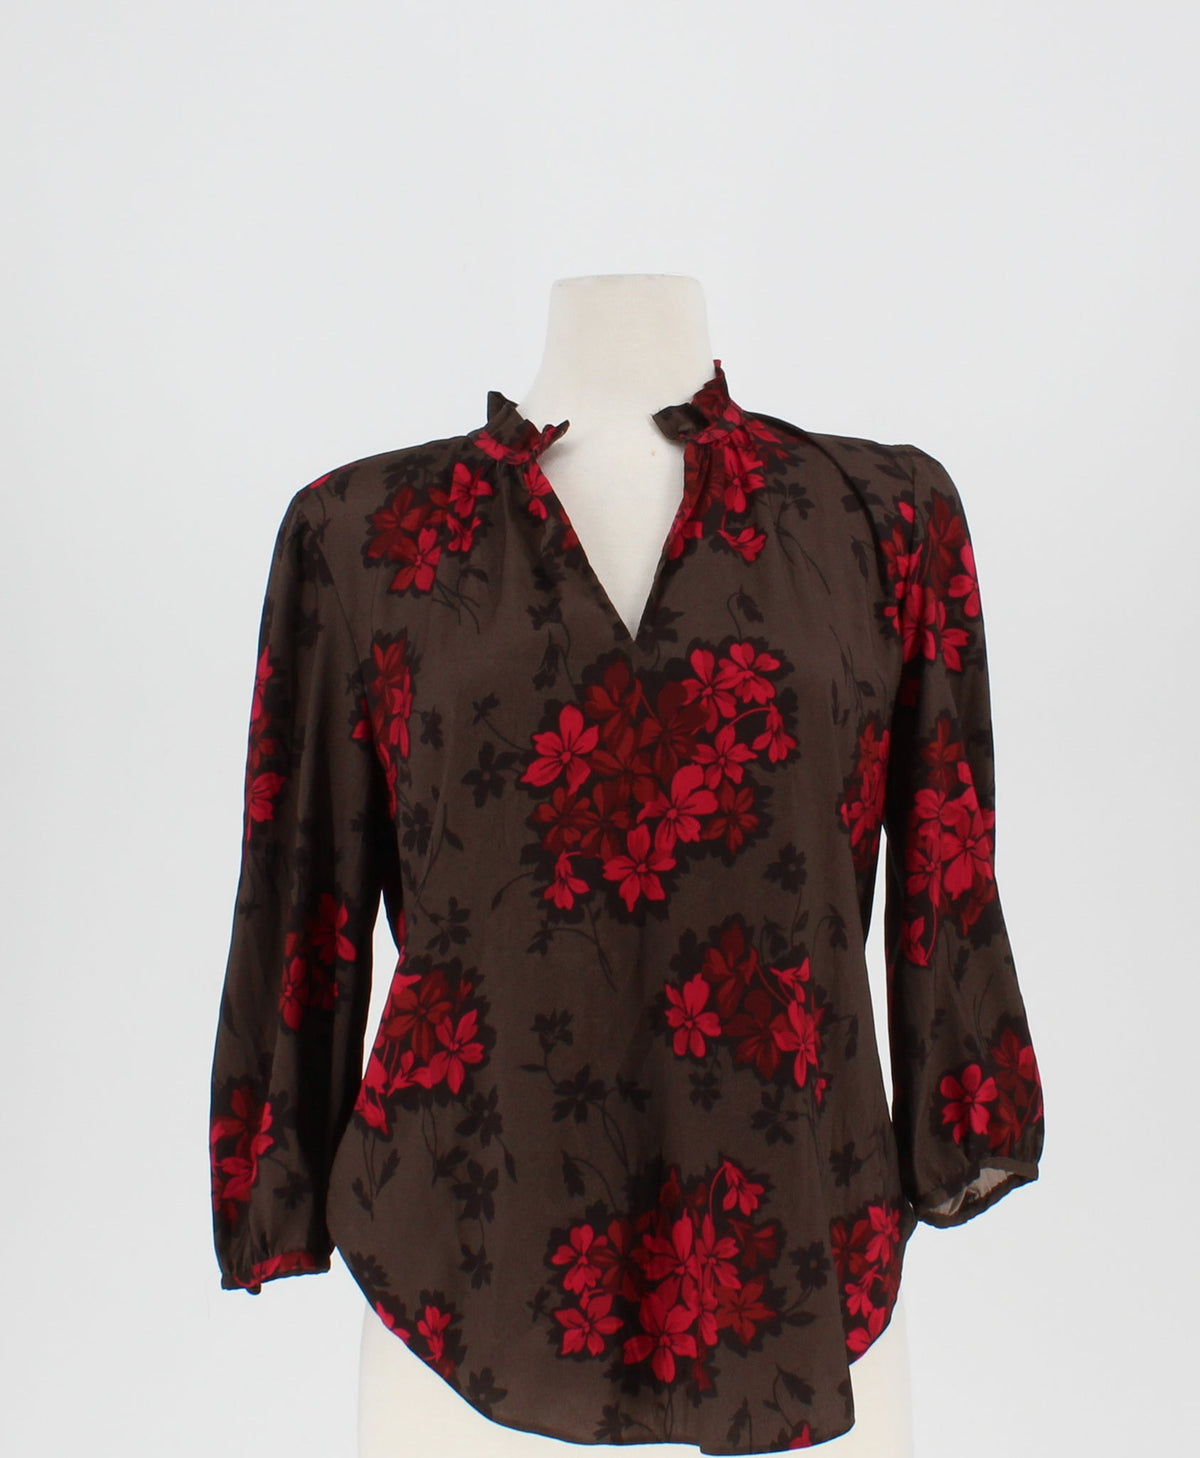 Ann Taylor Floral Key-hole Long-sleeved blouse